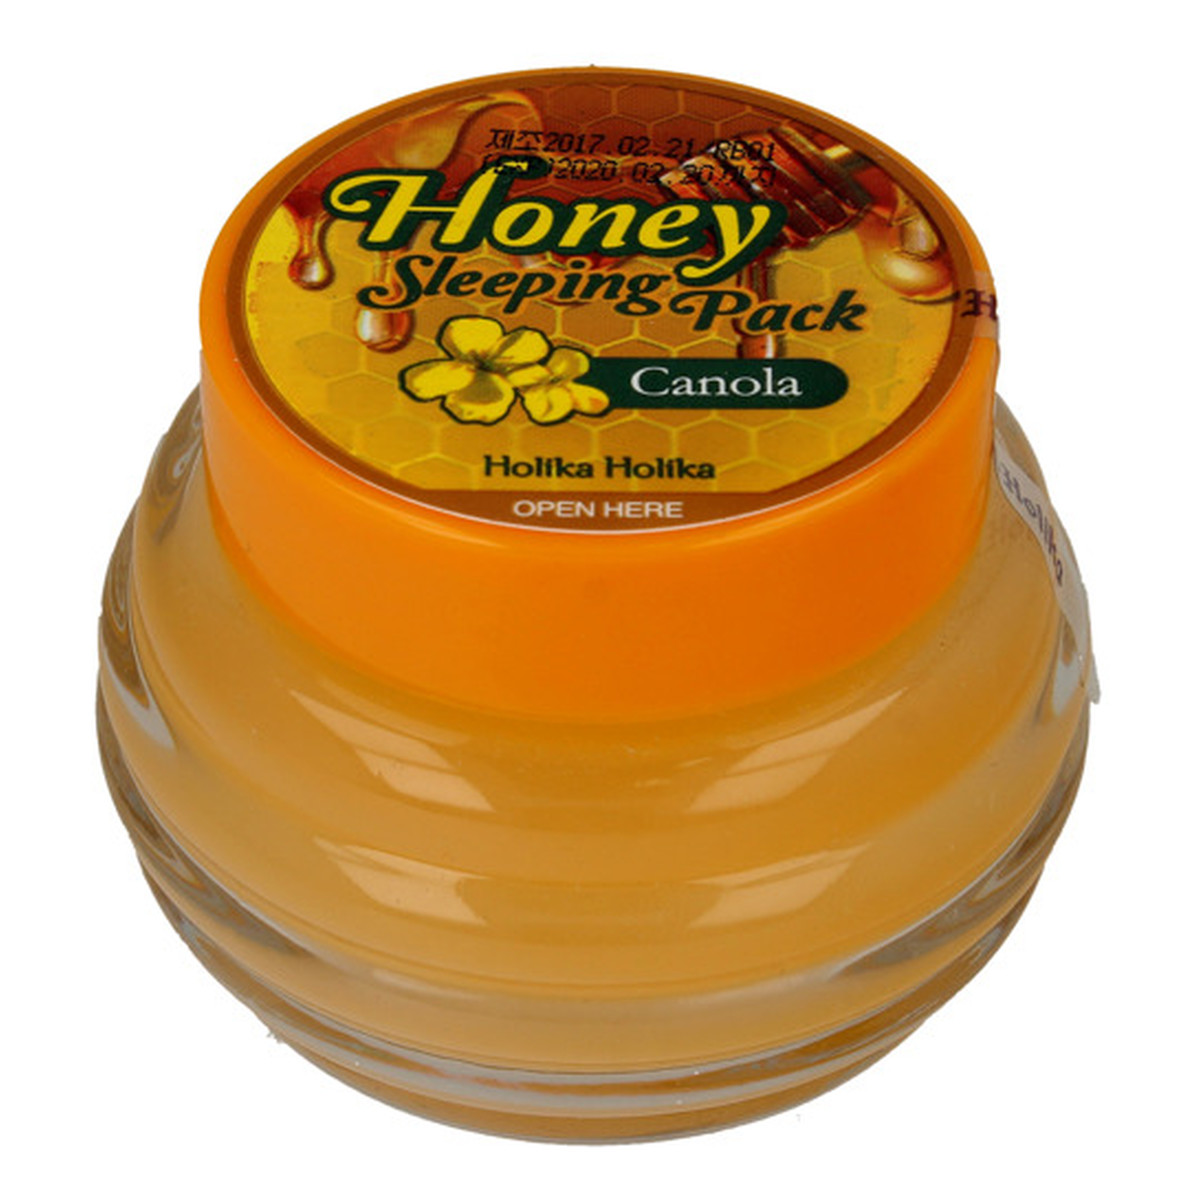 Holika Holika Honey Sleeping Pack żelowa maseczka pod oczy Canola 90ml